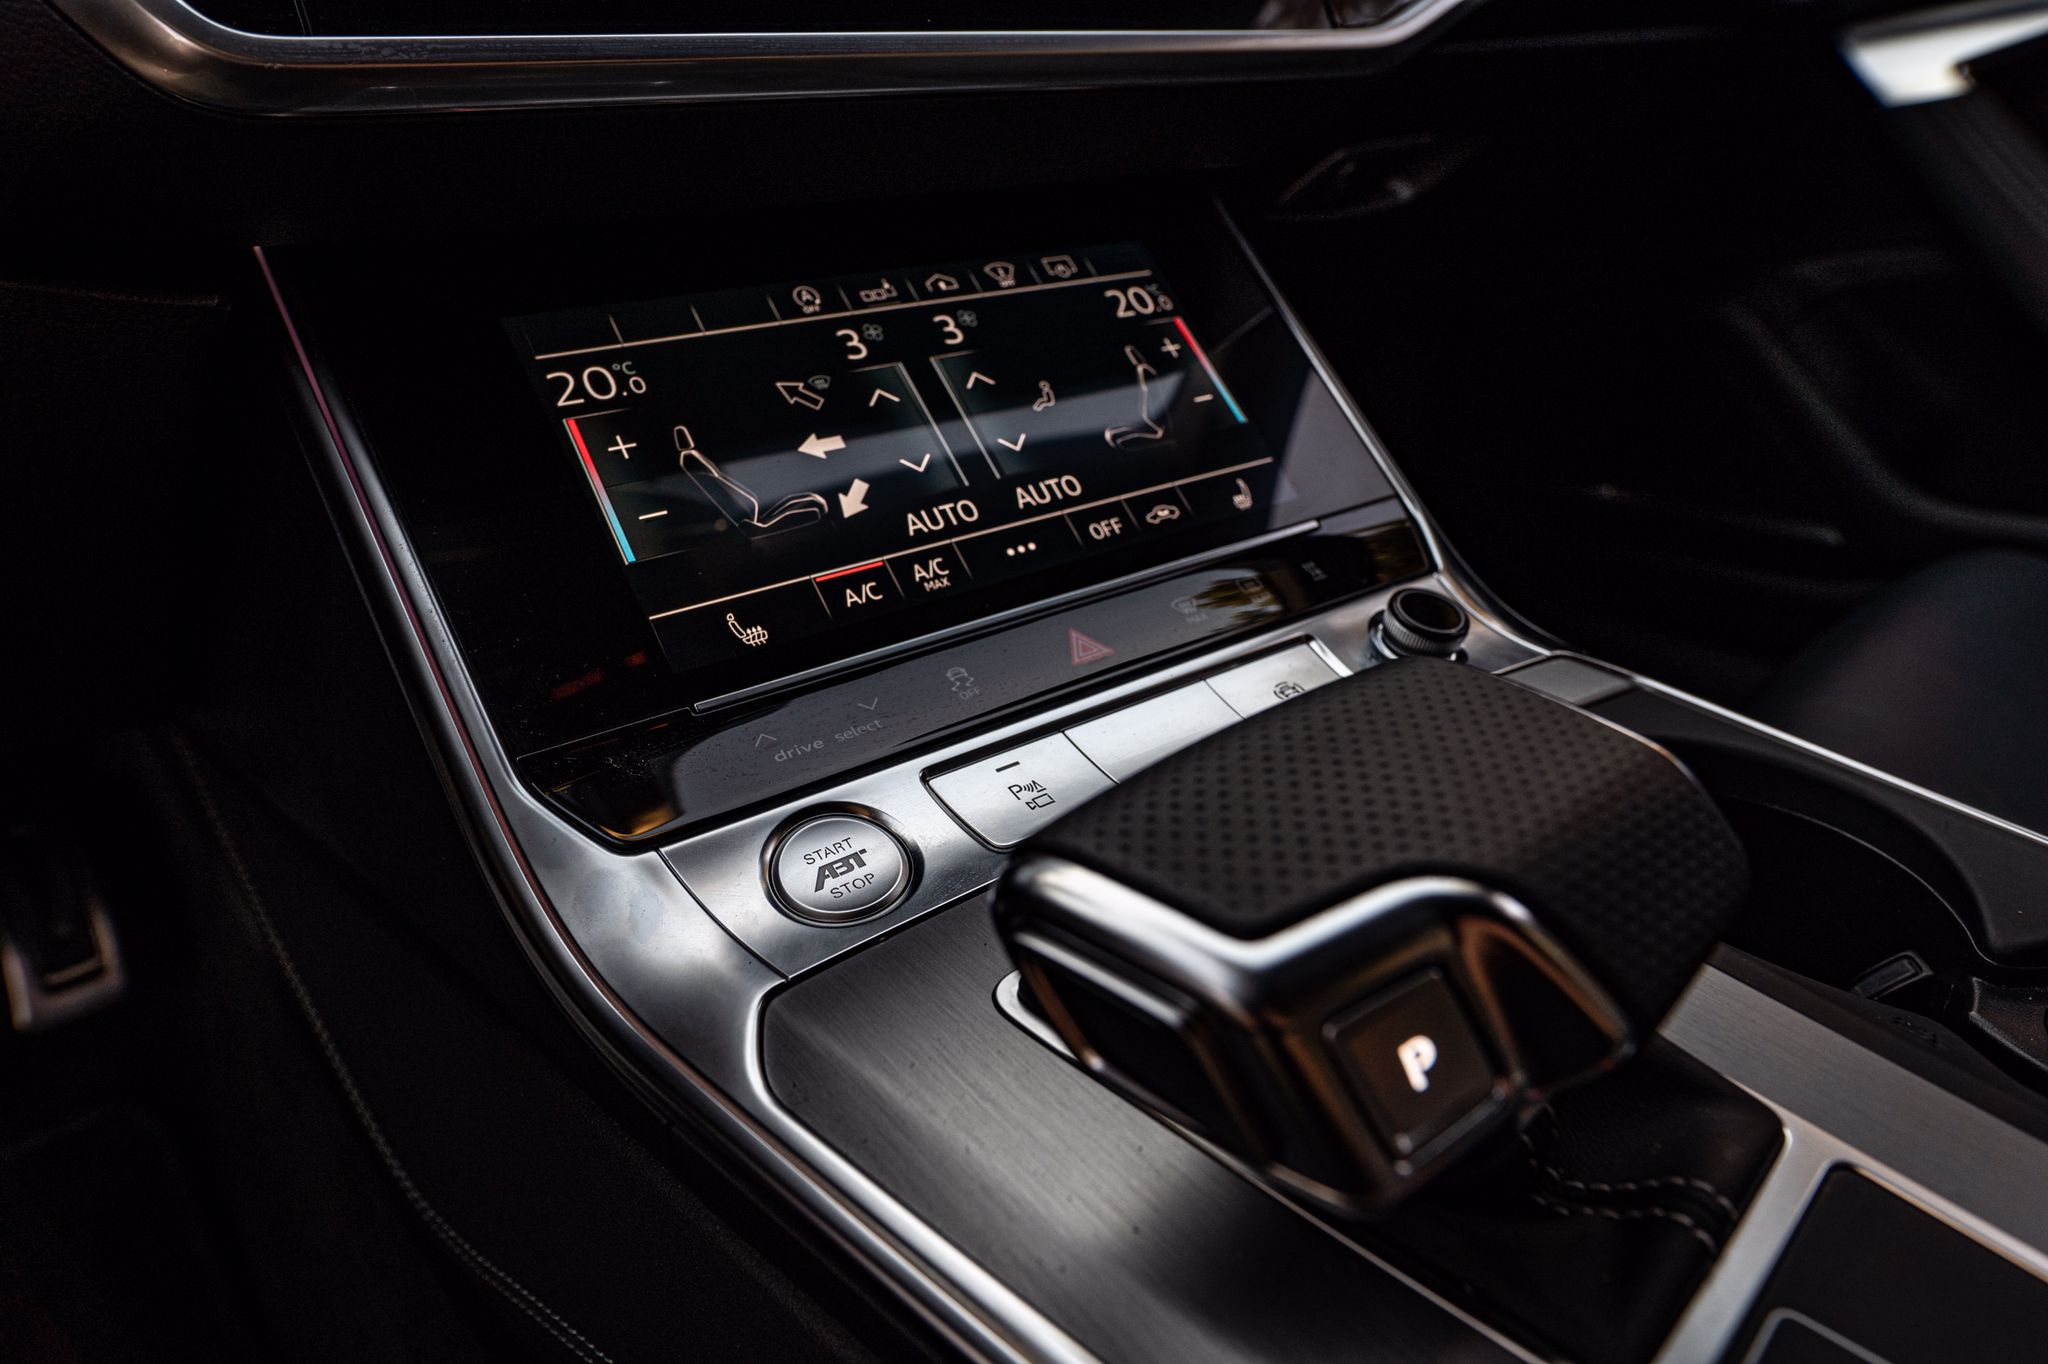 Interieur from Audi S6 ABT Avant long-term rental